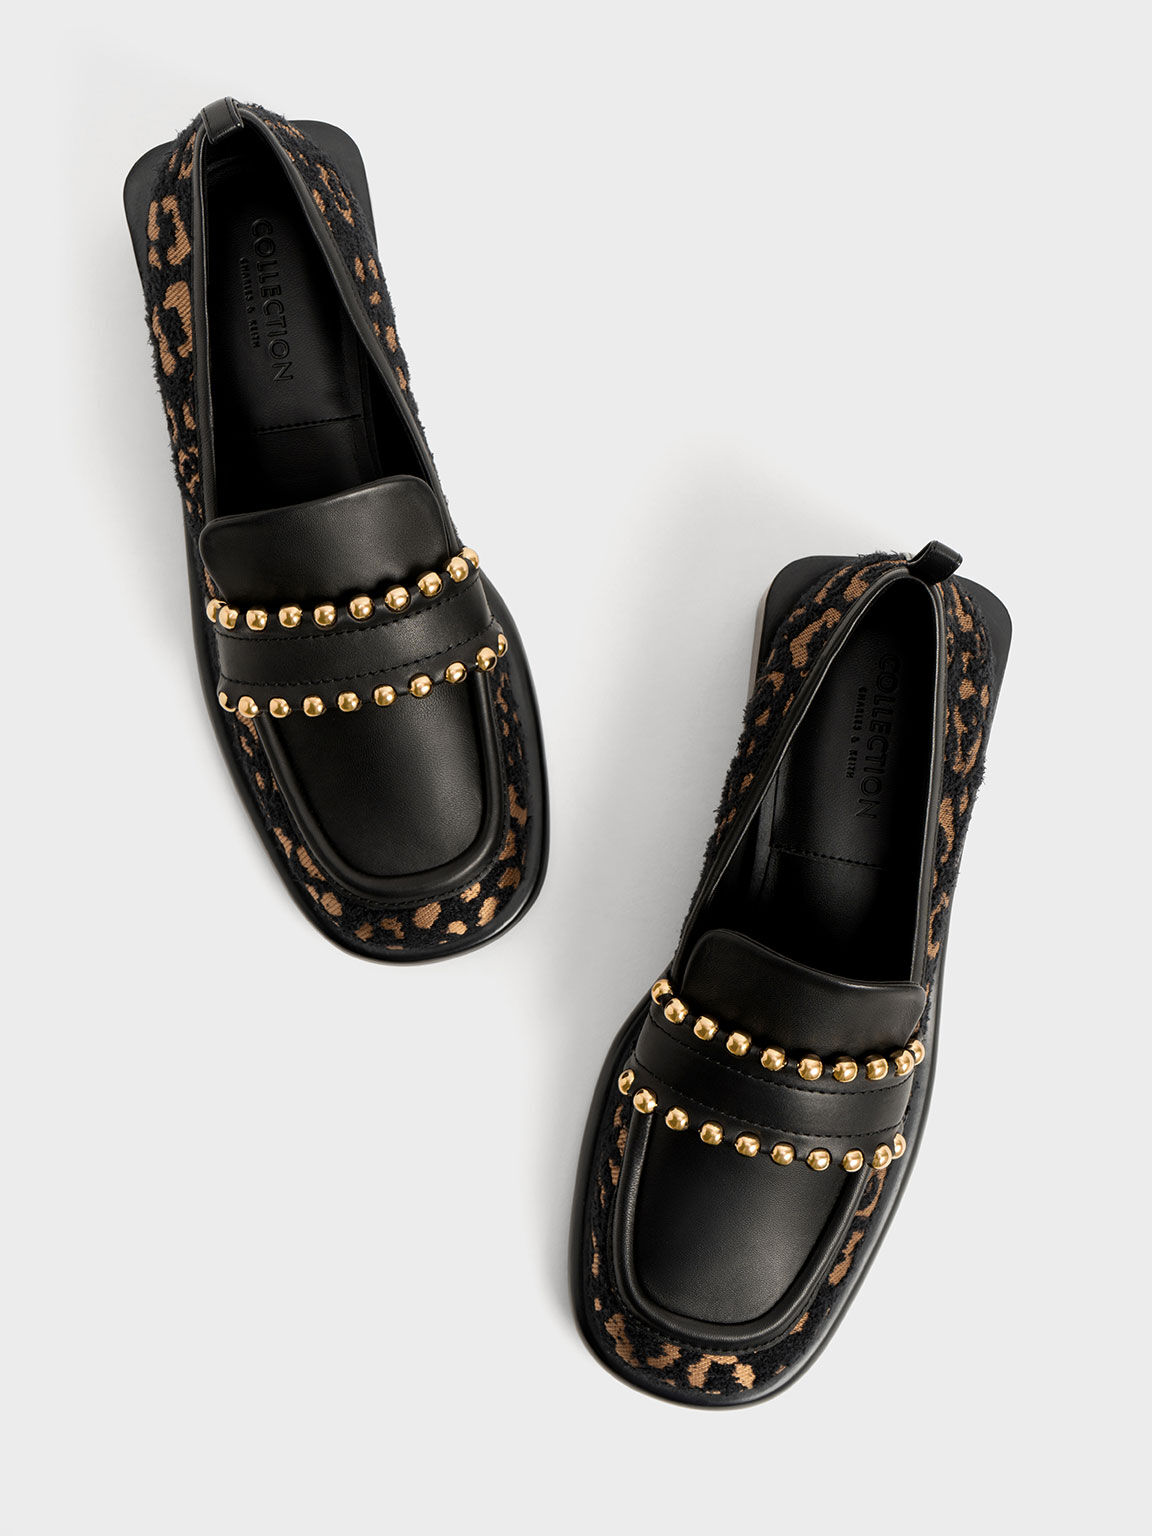 Studded Jacquard & Leather Penny Loafers, Animal Print Black, hi-res